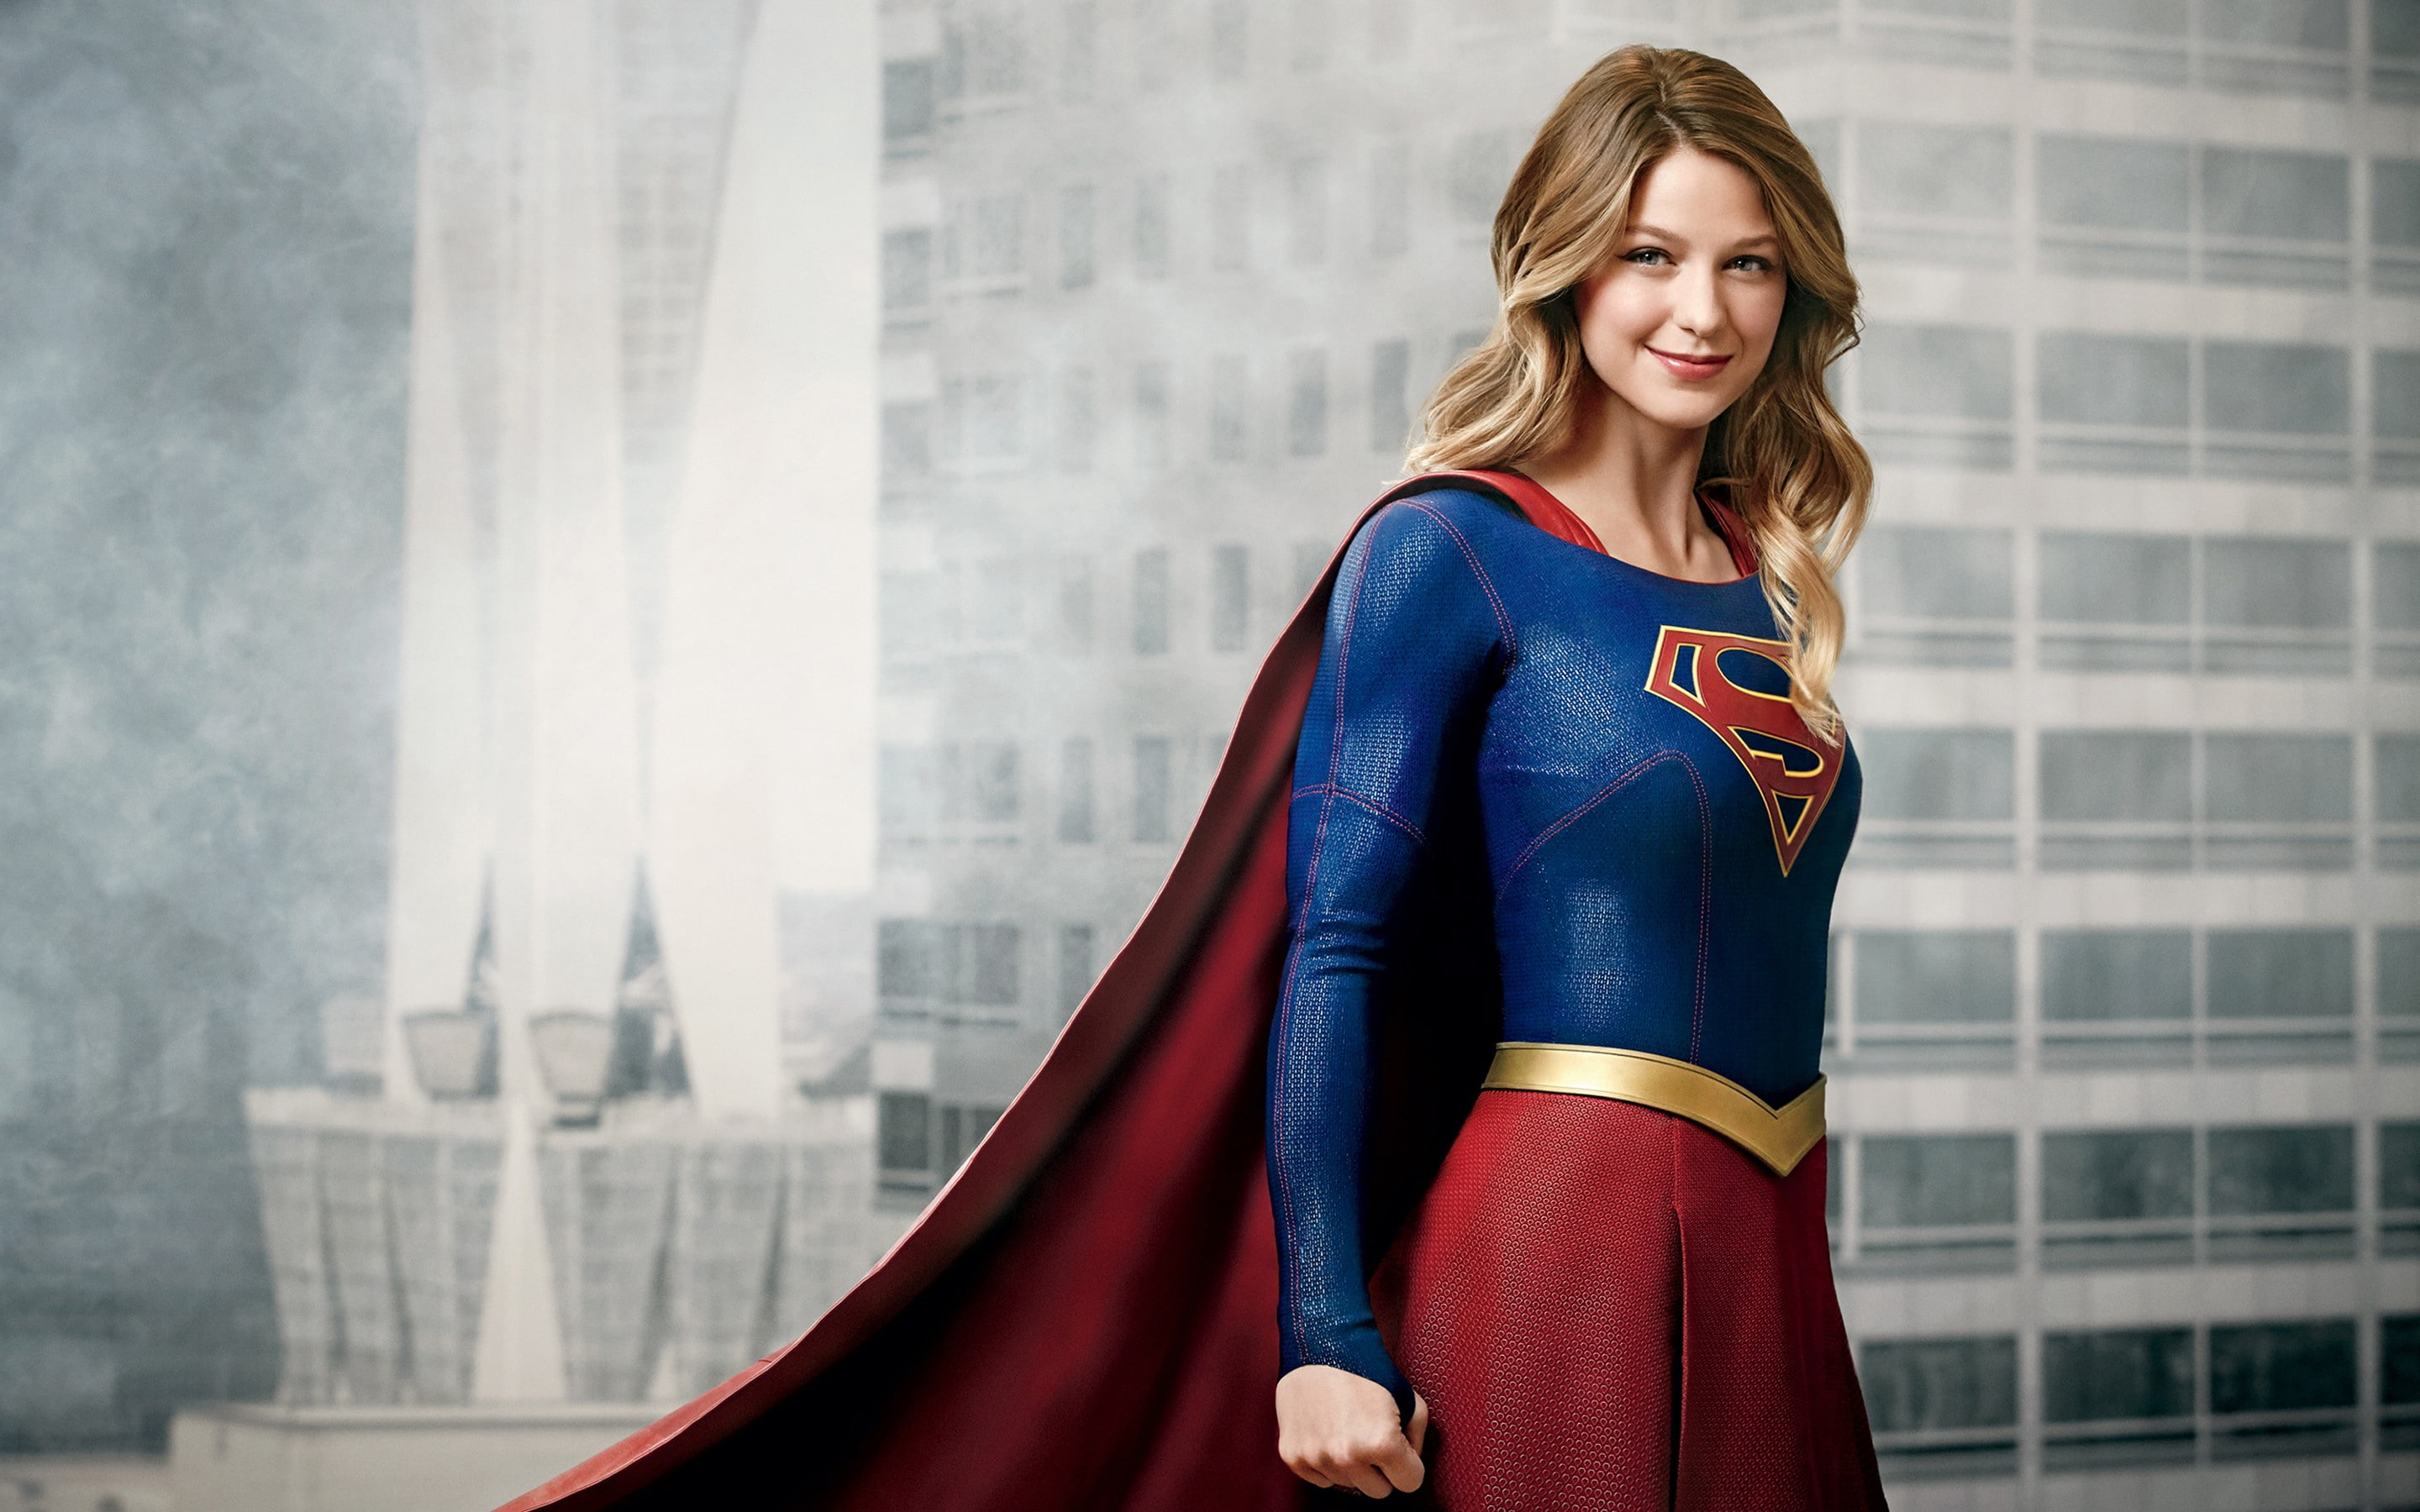 Supergirl Actress Melissa Benoist